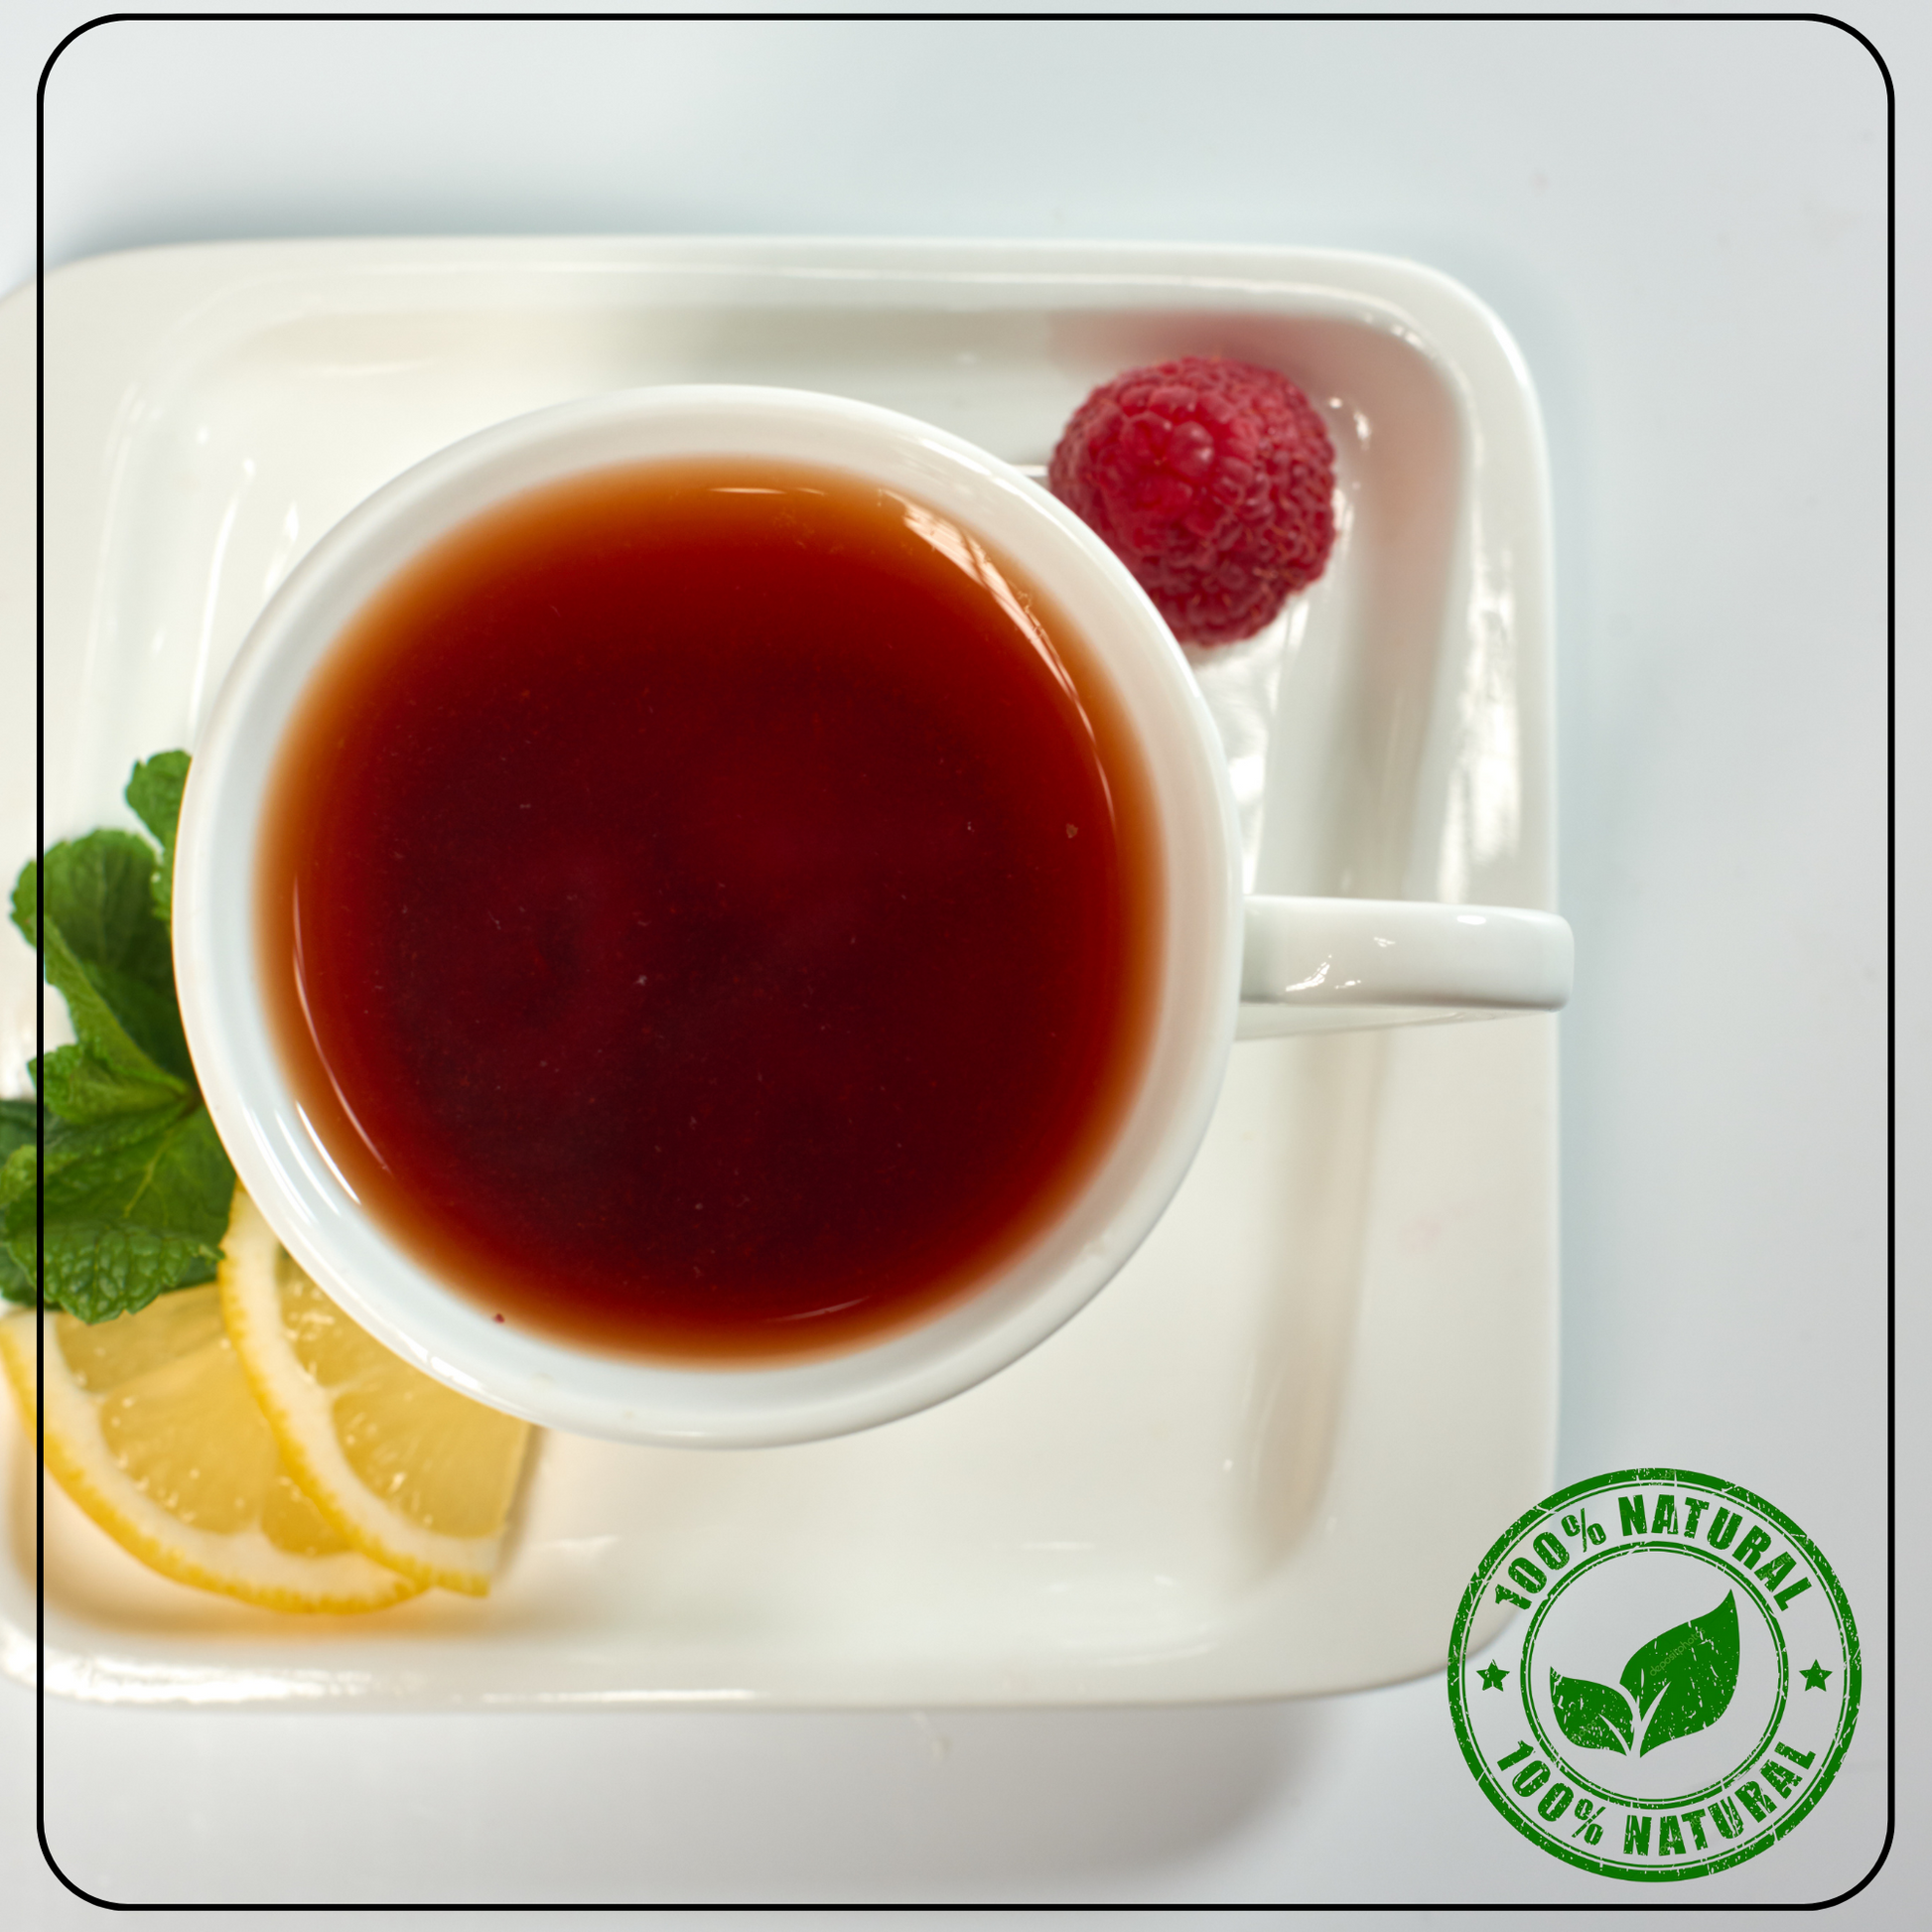 RADIANCE Lanka Raspberry Tea - How to boost your health and mood - Radhikas Fine Teas and Whatnots